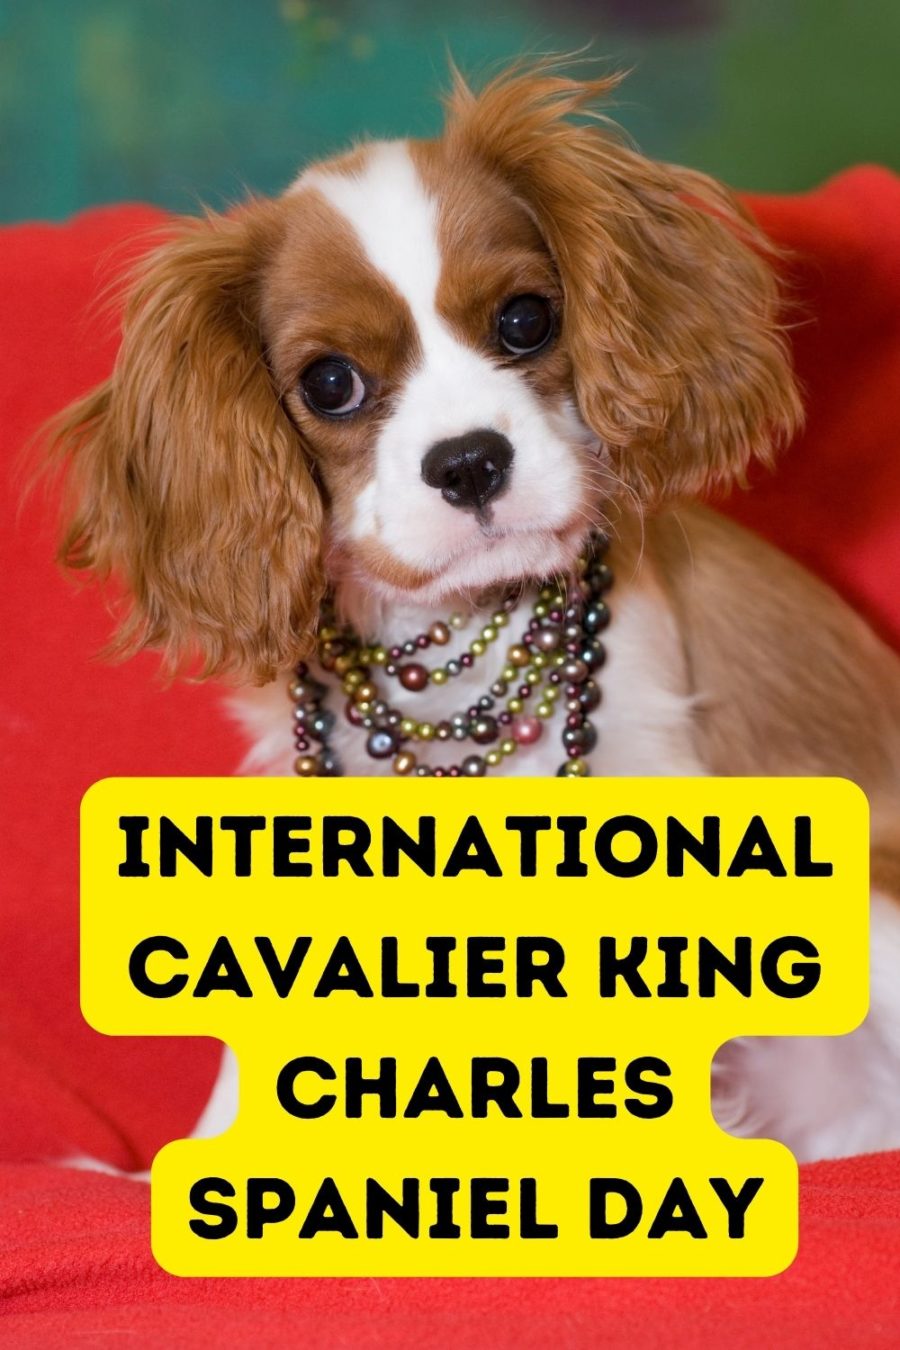 International Cavalier King Charles Spaniel Day